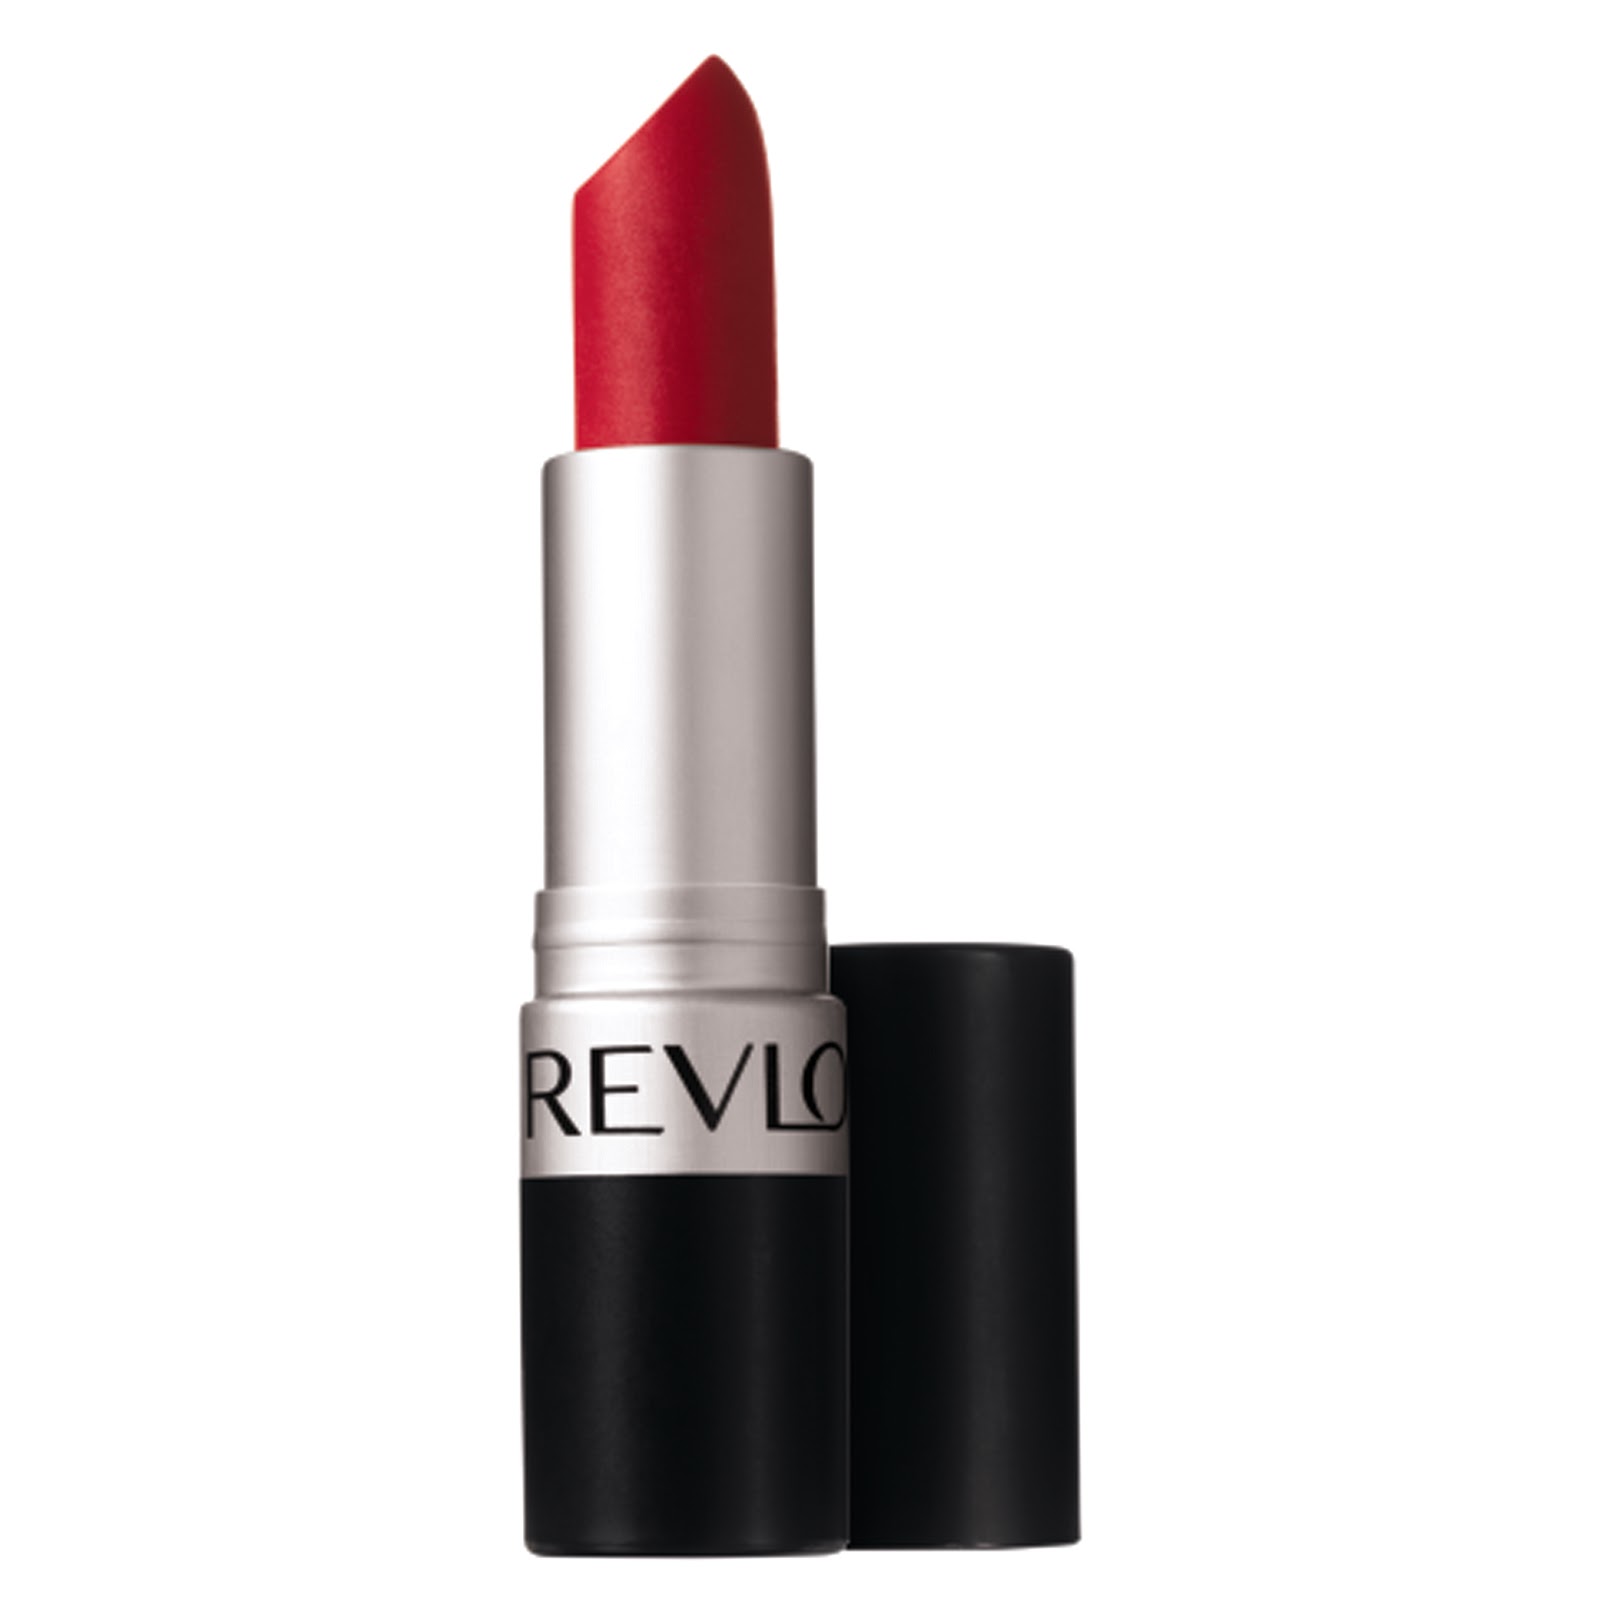 Product Review: Revlon Super Lustrous Lipstick in Raisin 